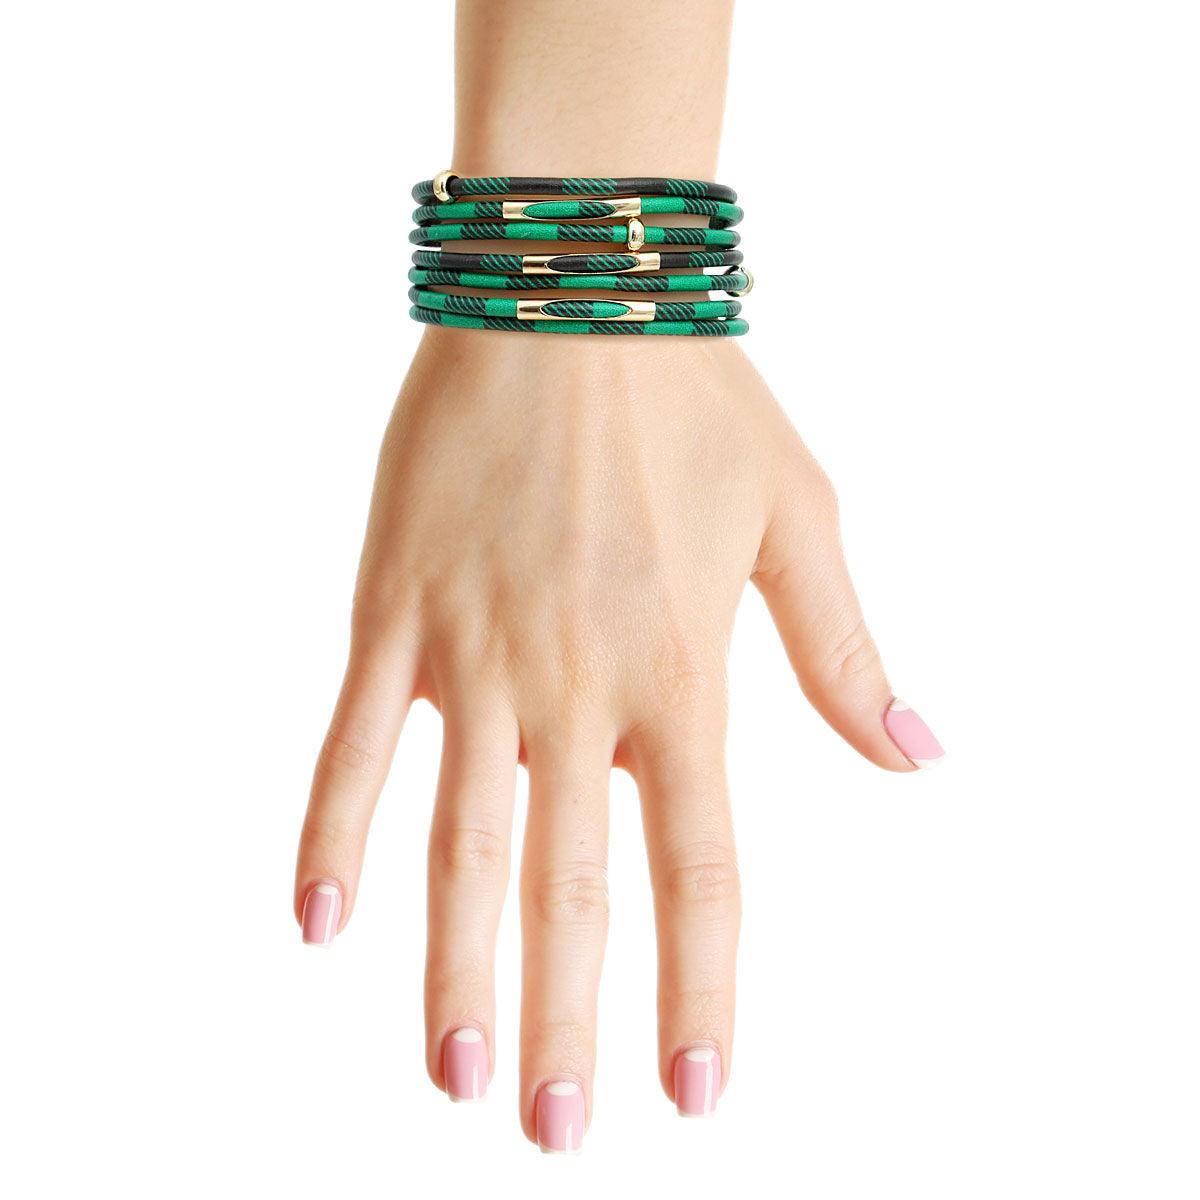 Trendy Green Cord Bracelet: Shop Now for Stylish Women's Jewelry